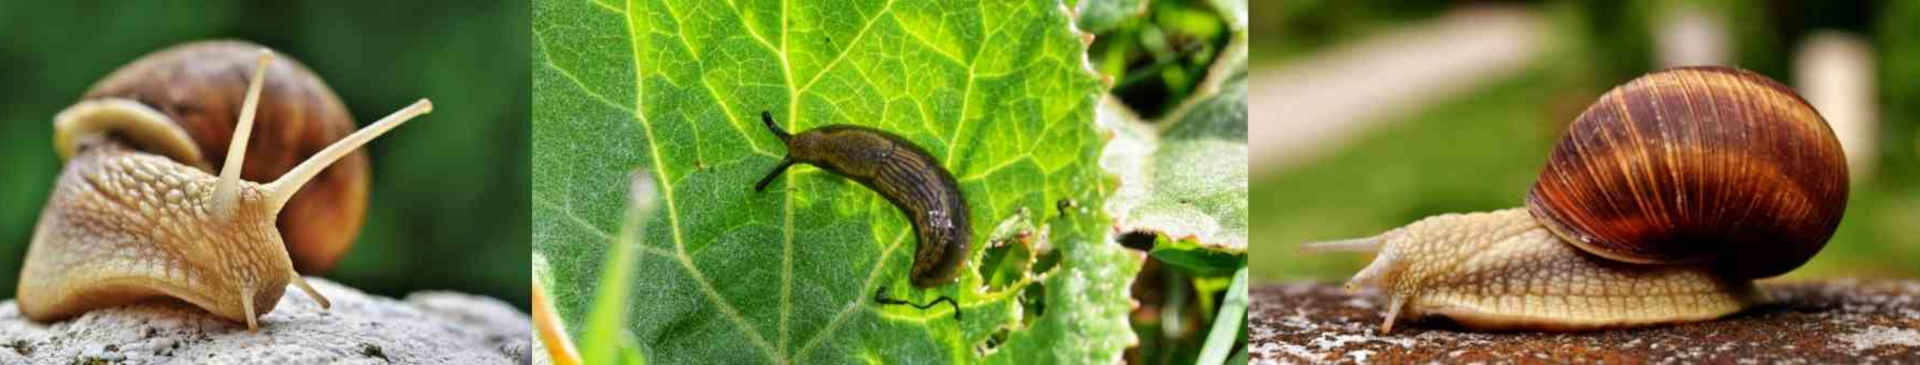 Environmentally Friendly Snail and Slug Control Using Copper Tape